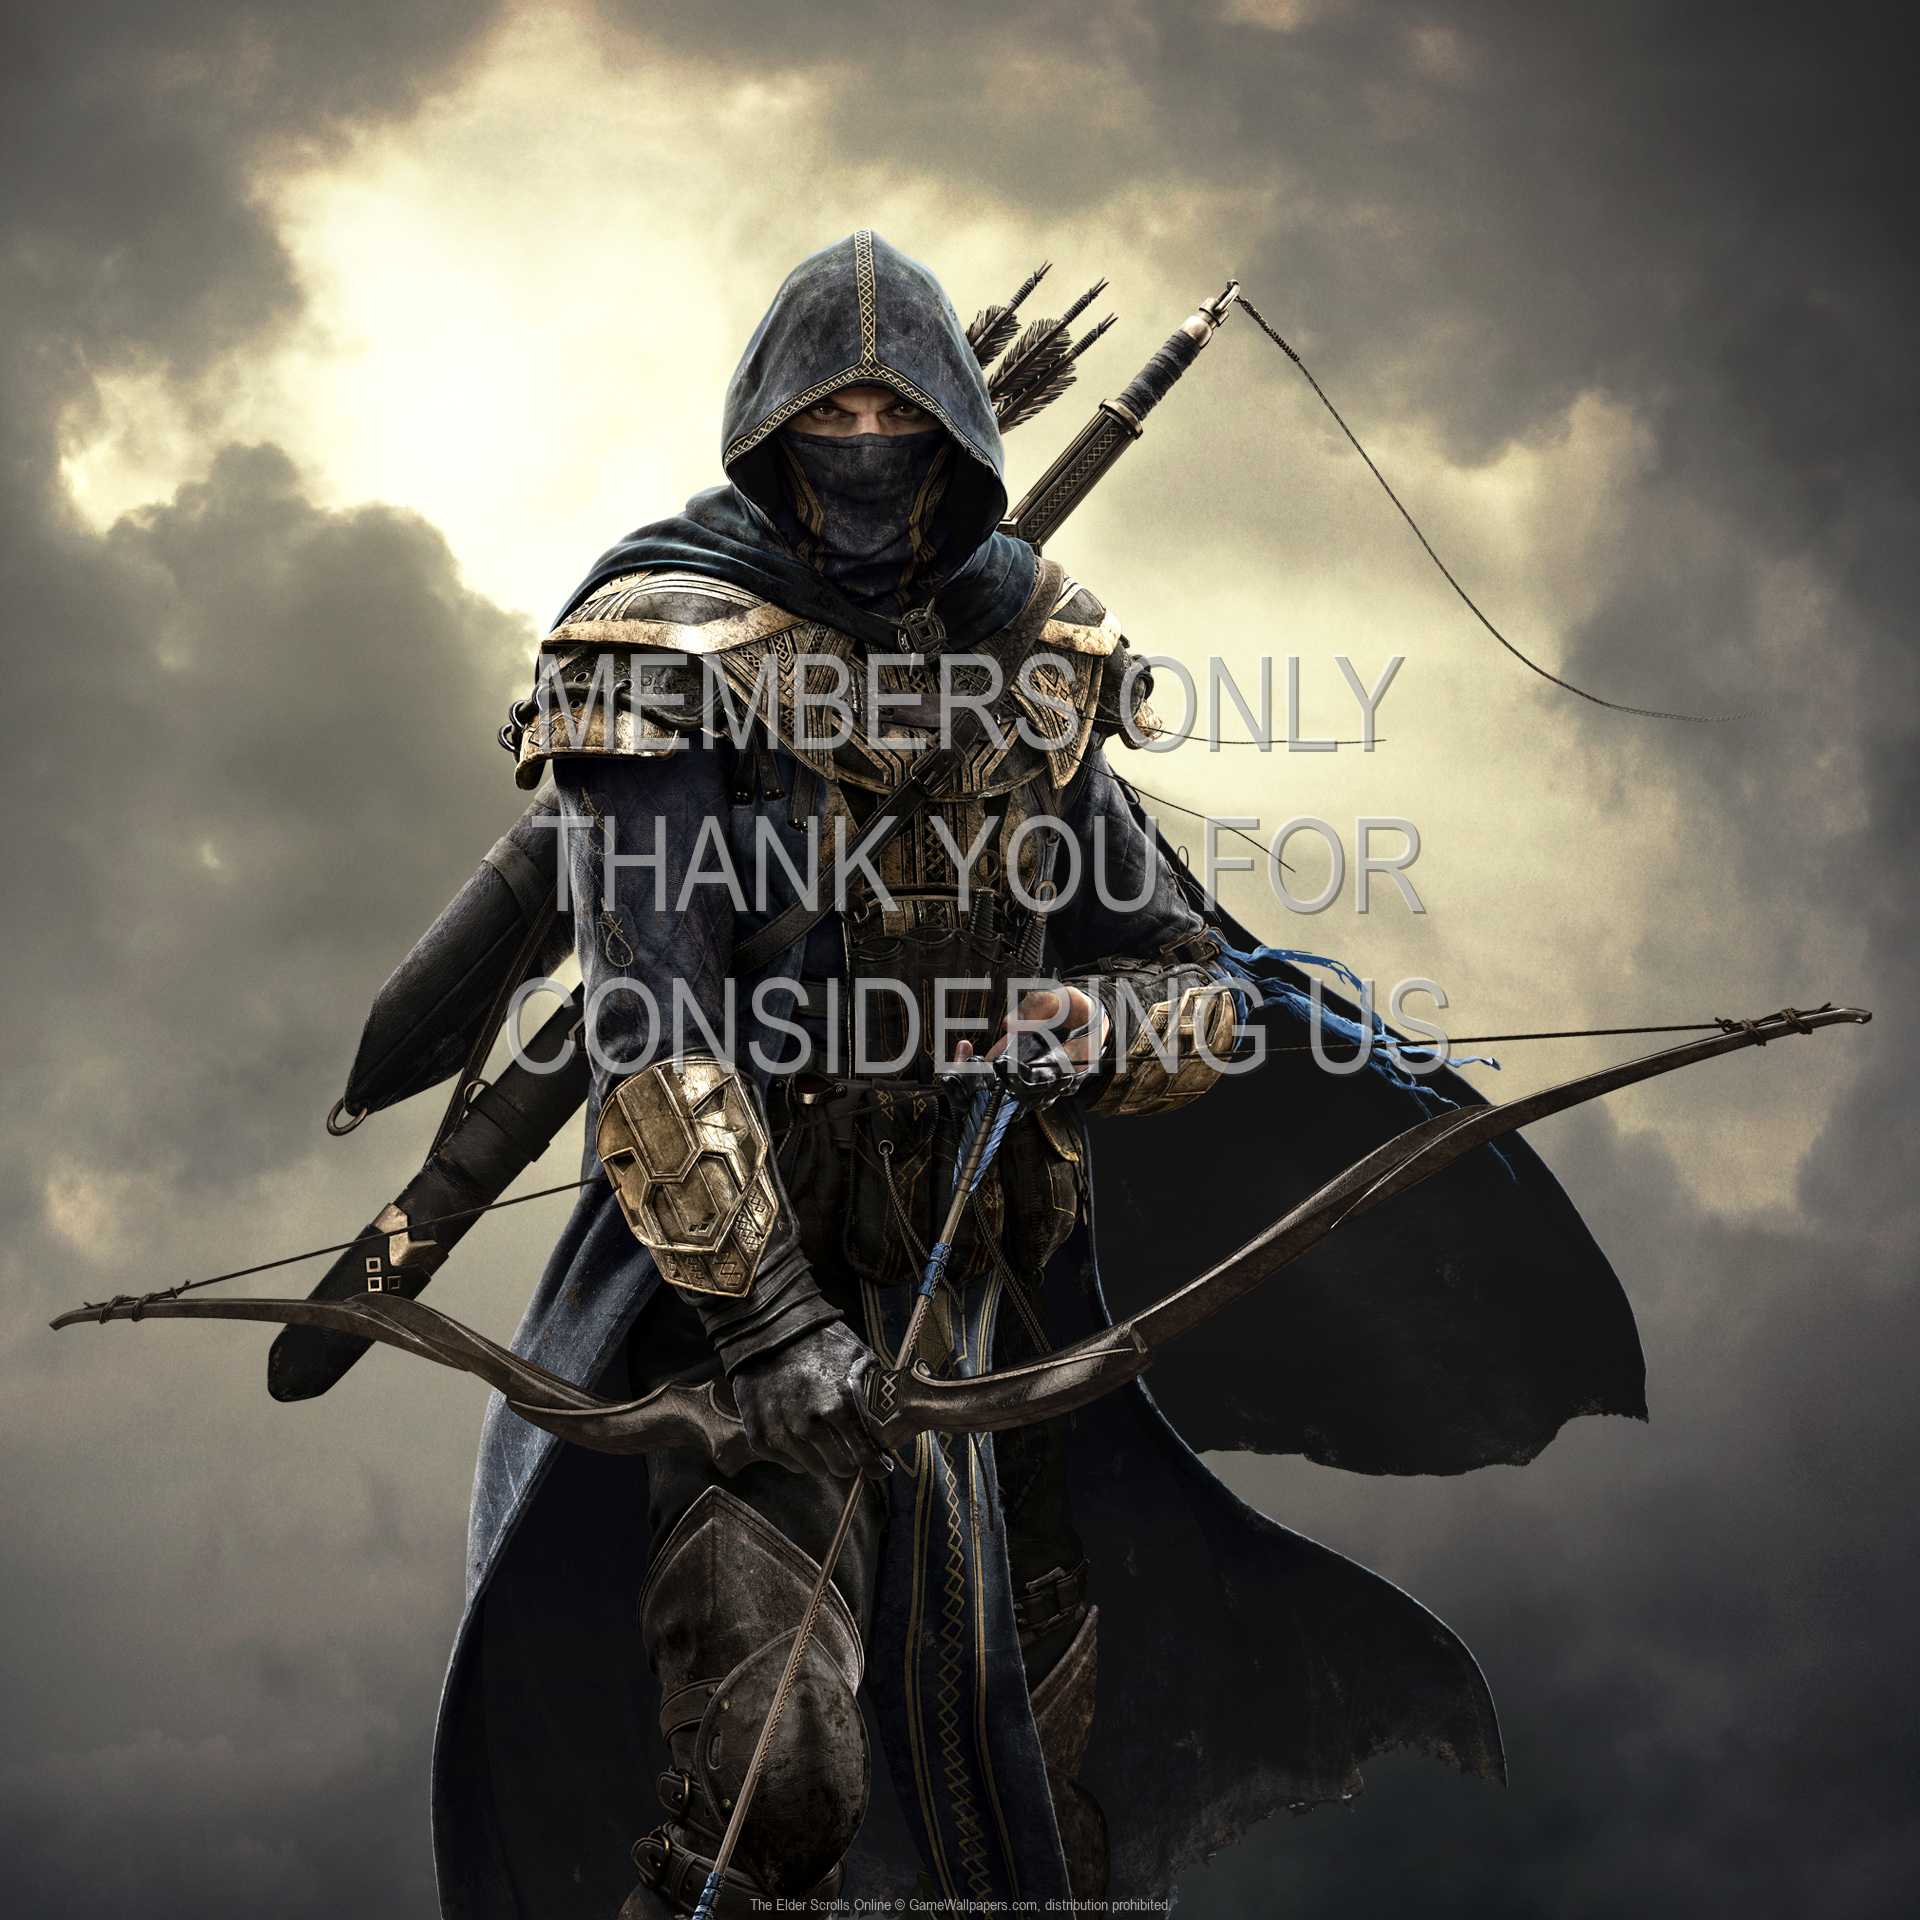 The Elder Scrolls Online 1080p%20Horizontal Mobile wallpaper or background 07